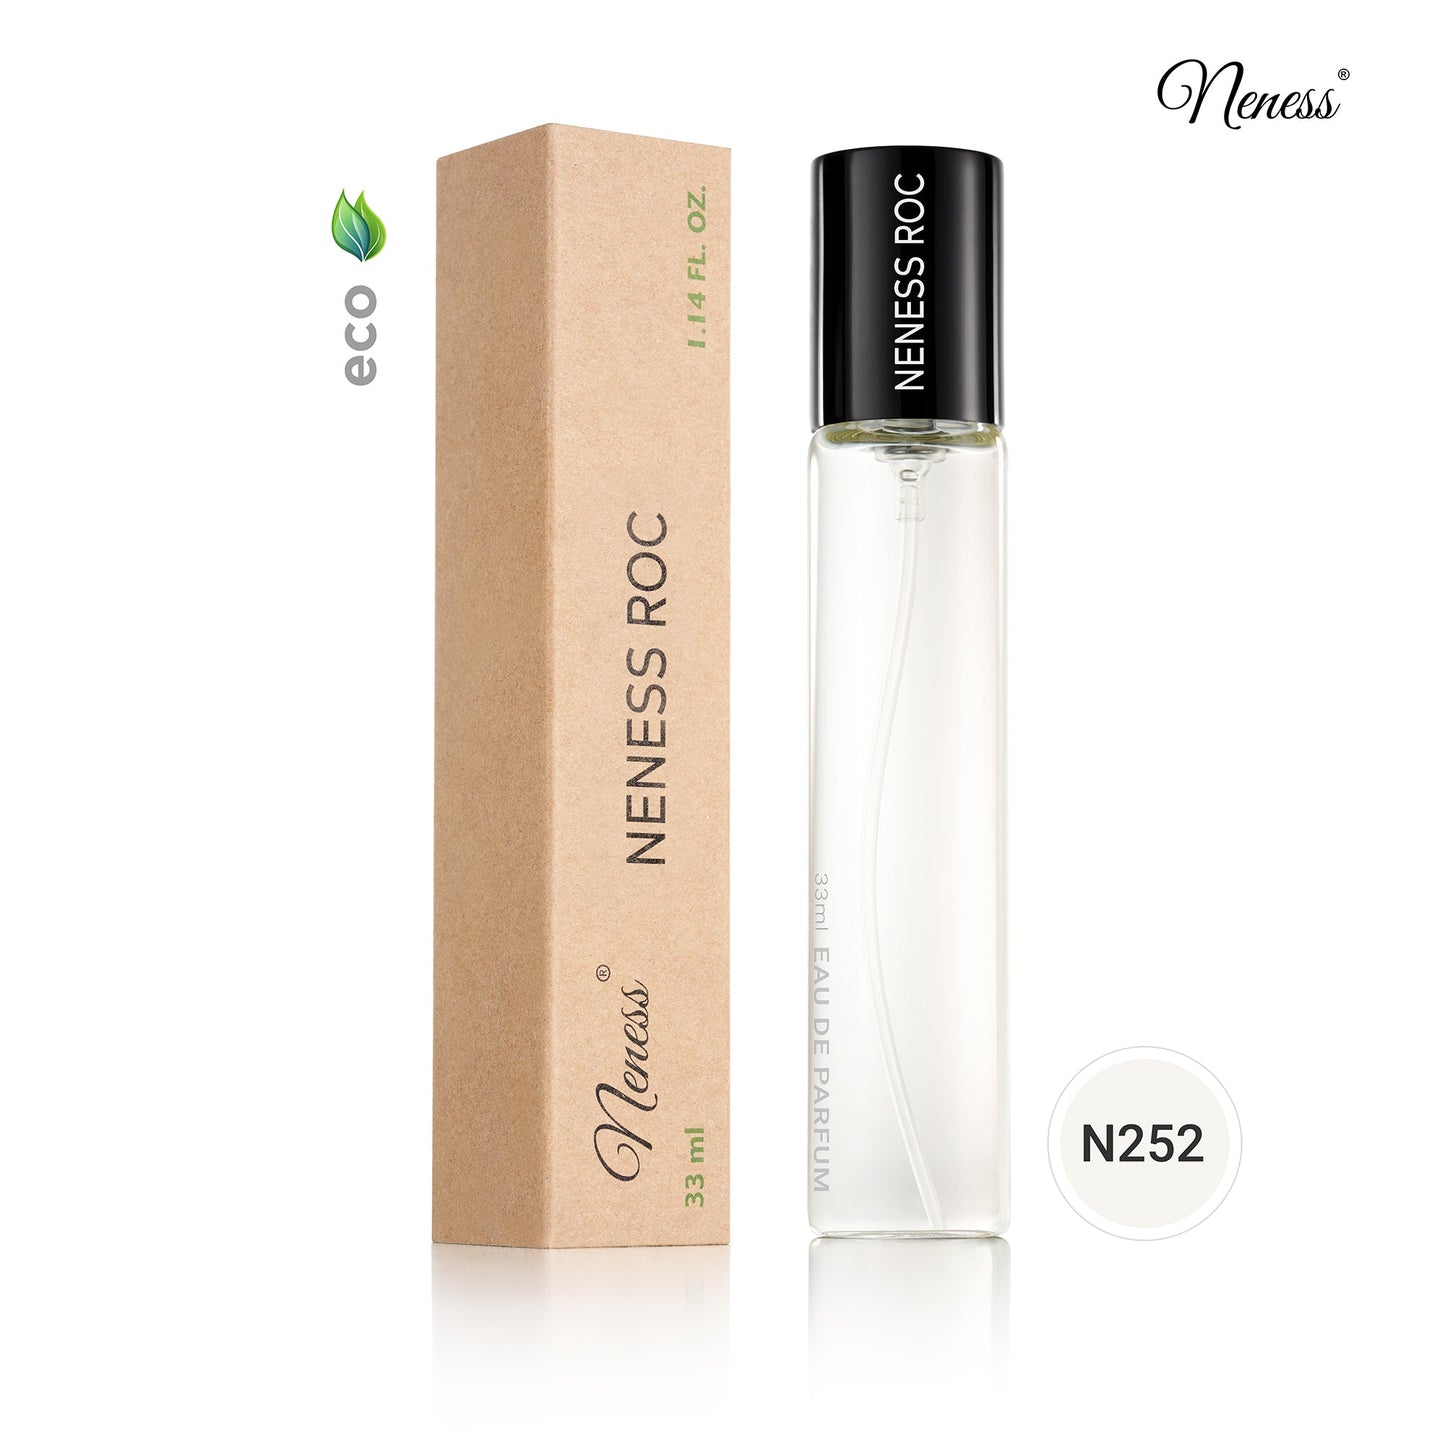 N252. Neness ROC - 33 ml - Parfums unisexes